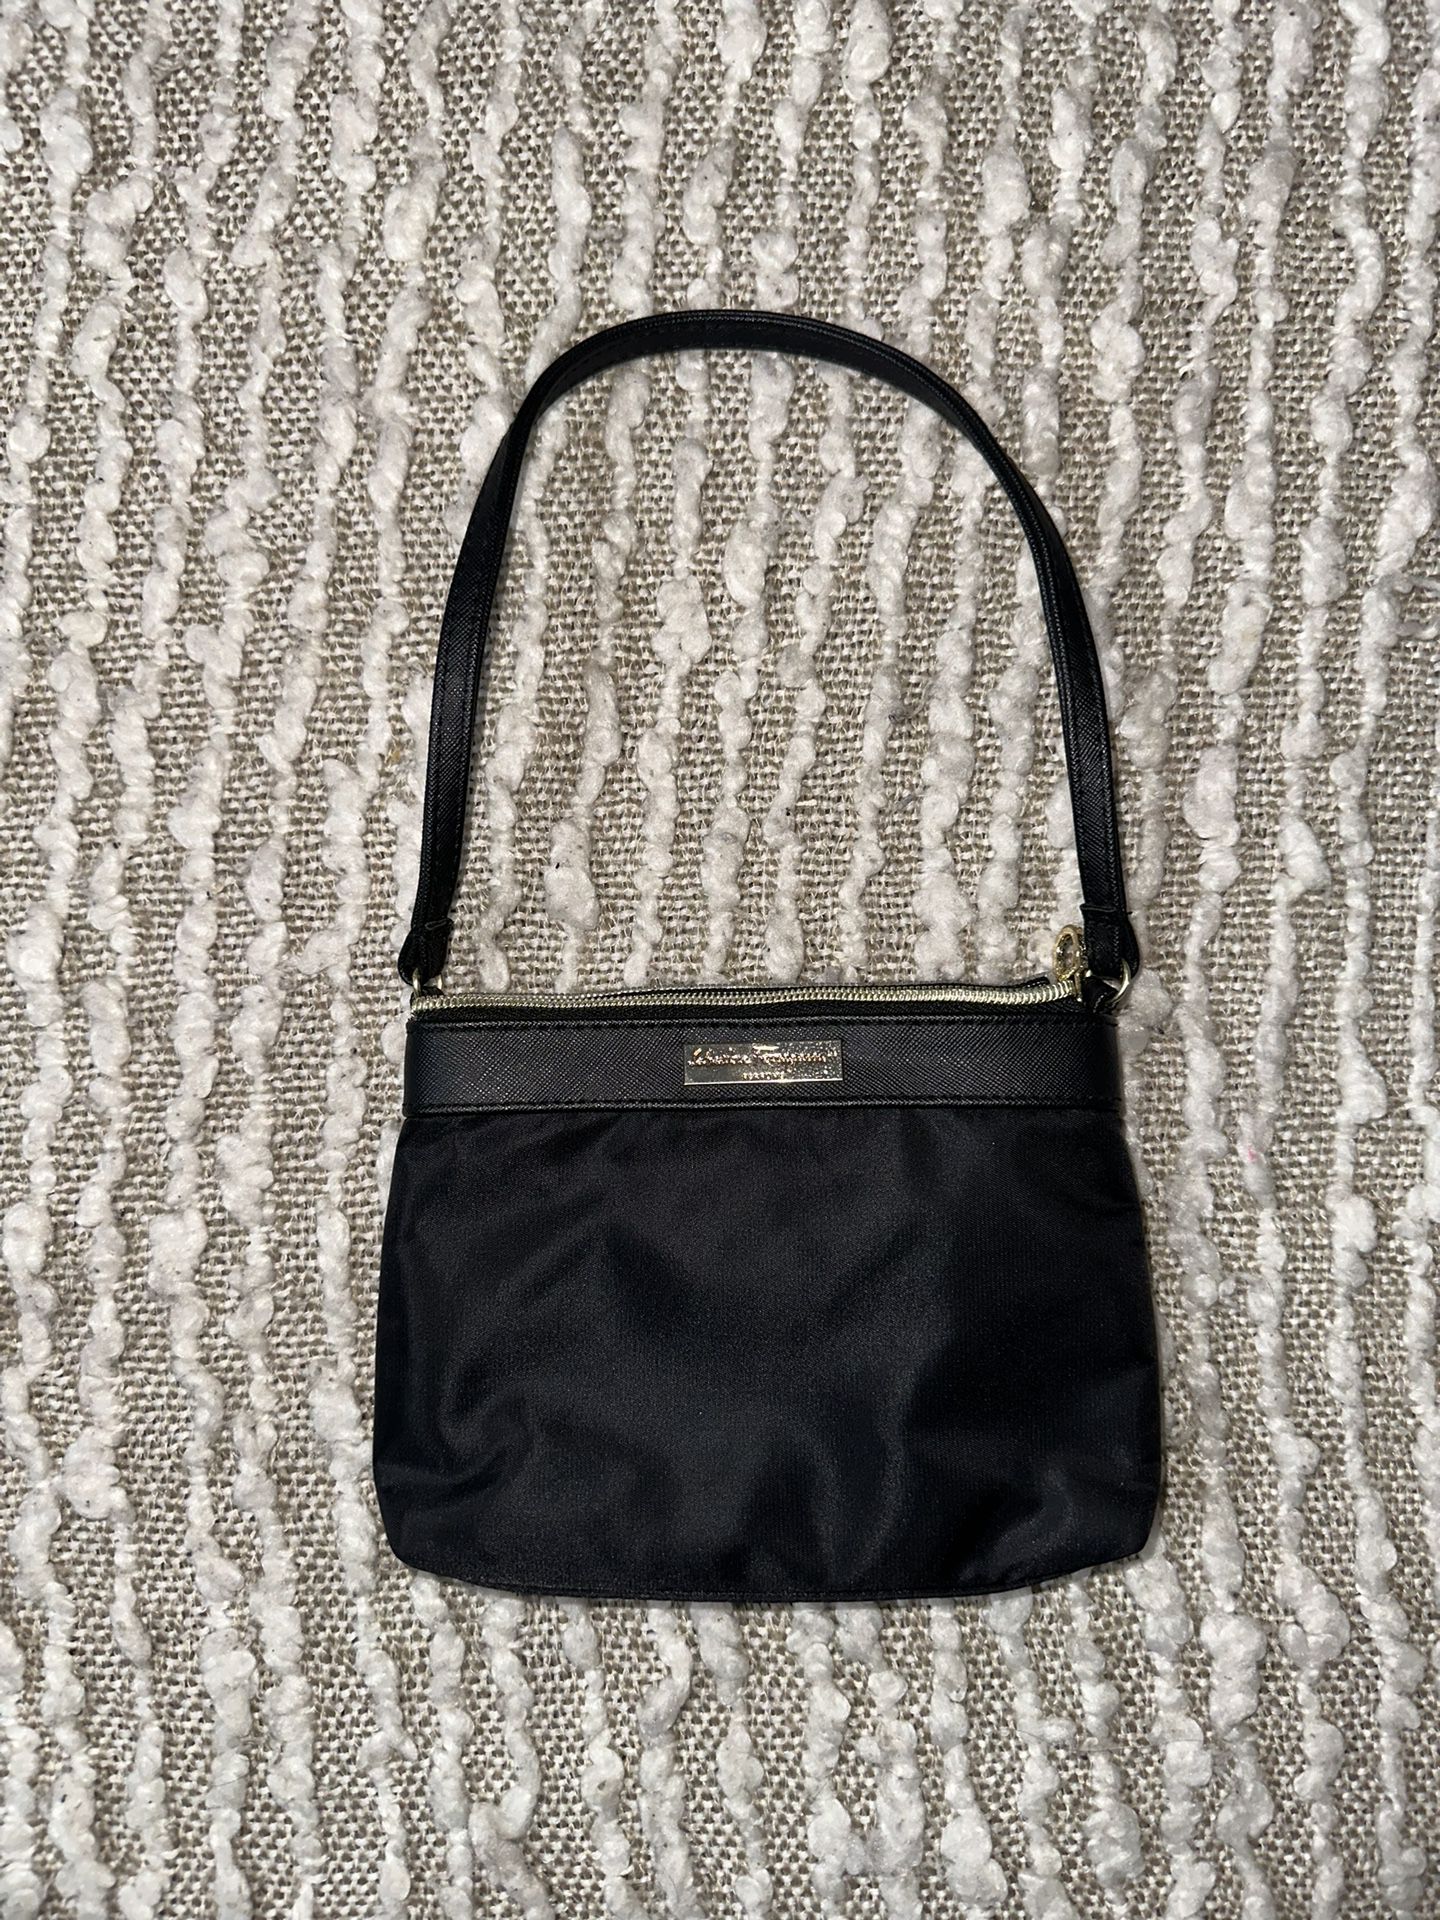 Salvatore Ferragamo Authentic Shoulder Bag Black Nylon